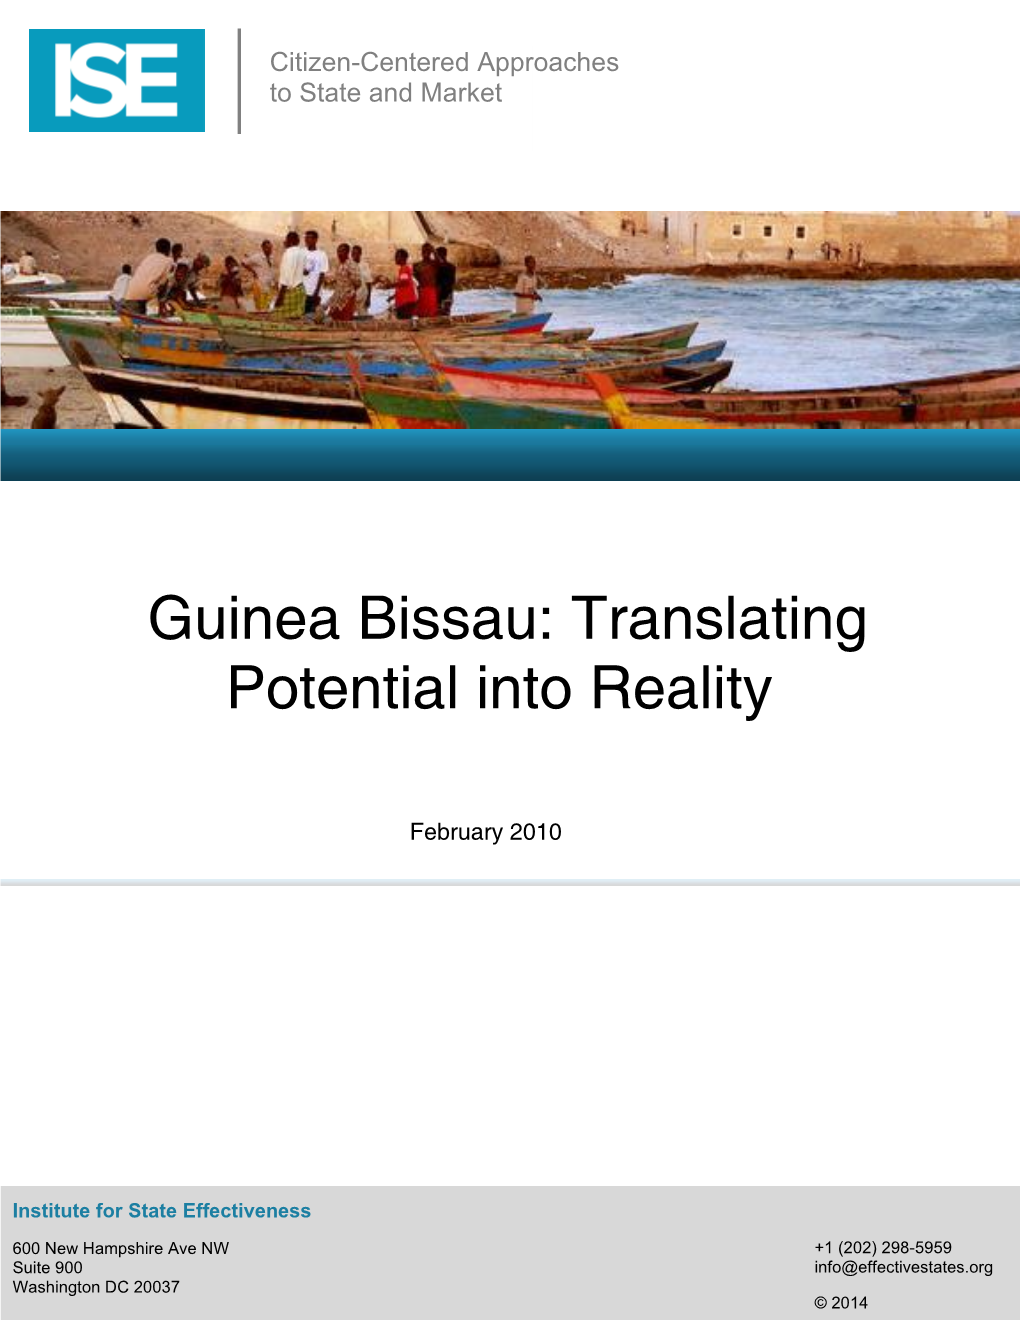 Guinea Bissau: Translating Potential Into Reality